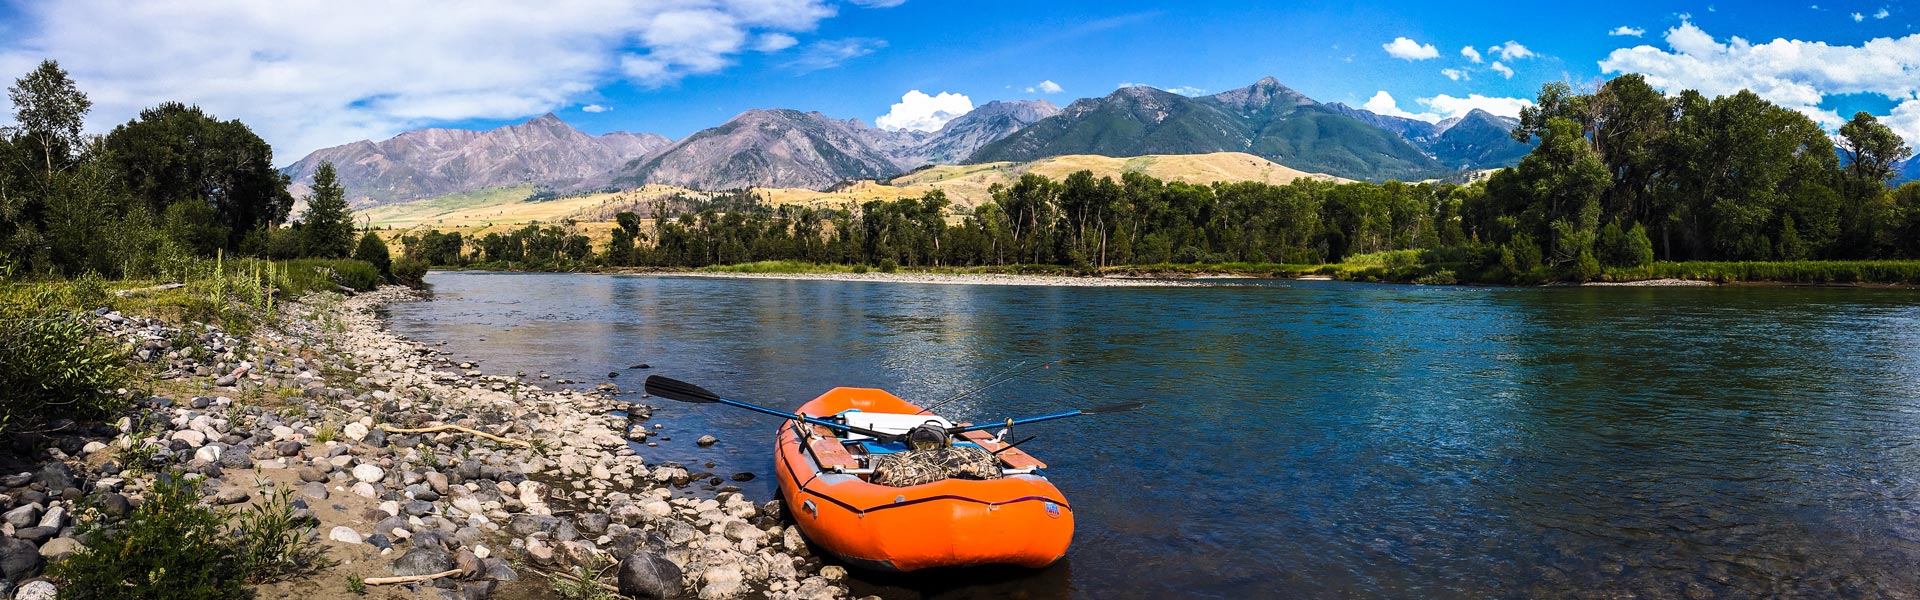 Raft on Yellowstone River